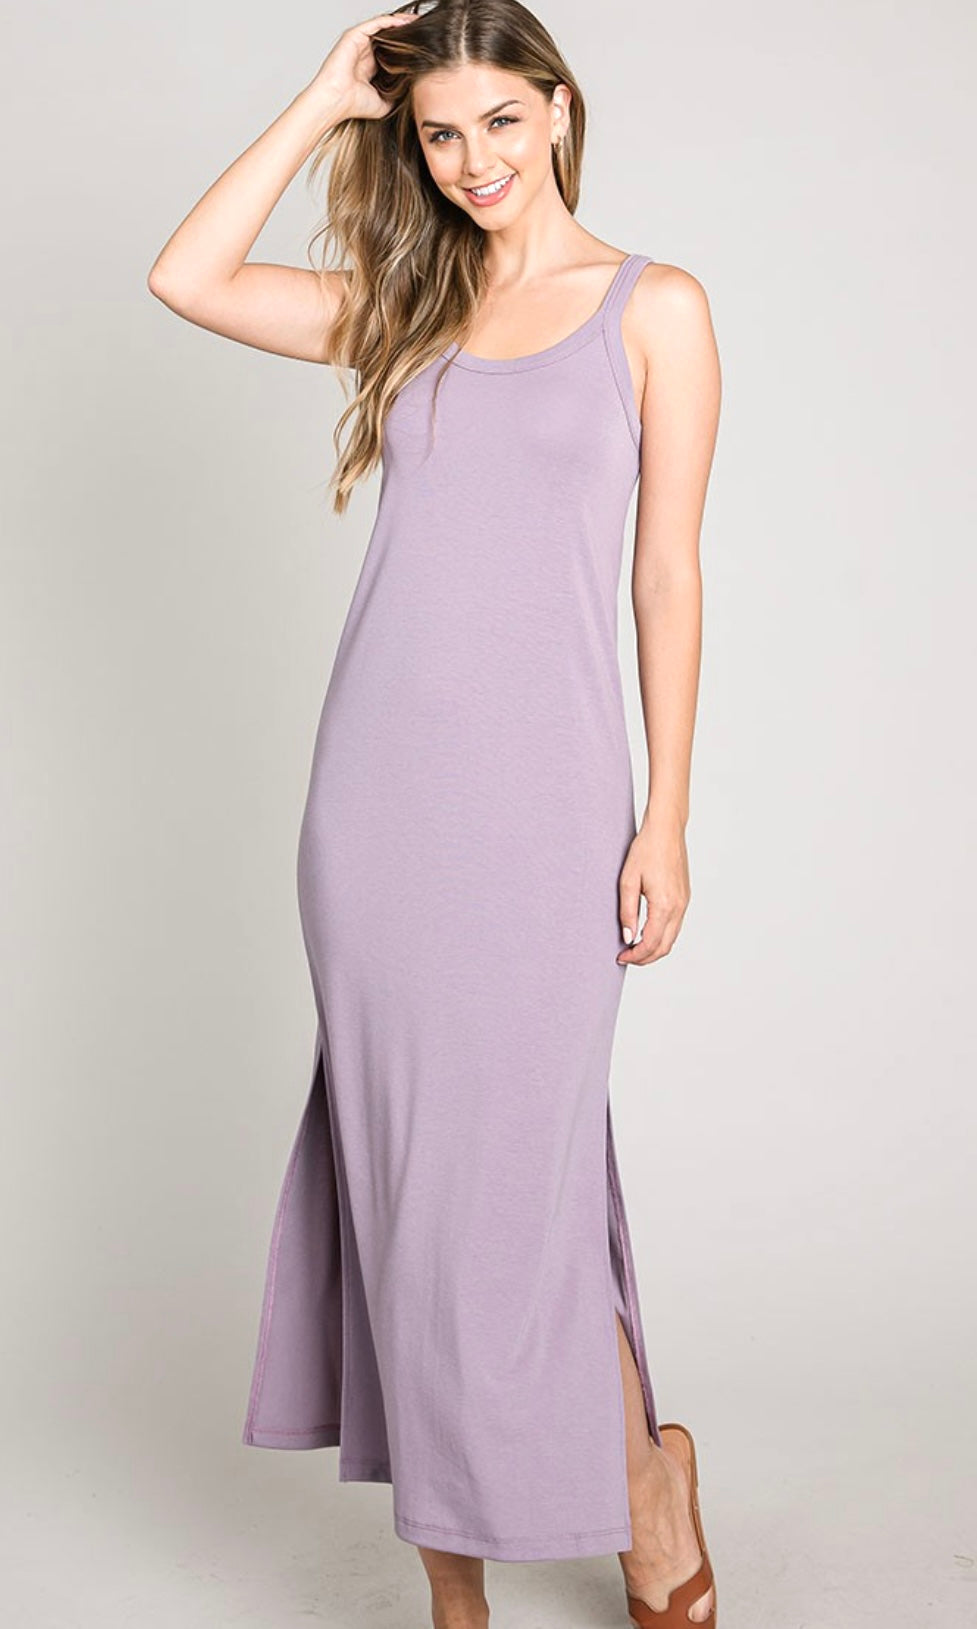 *SALE! Axle Grape Lavender Soft Jersey Knit Midi Dress